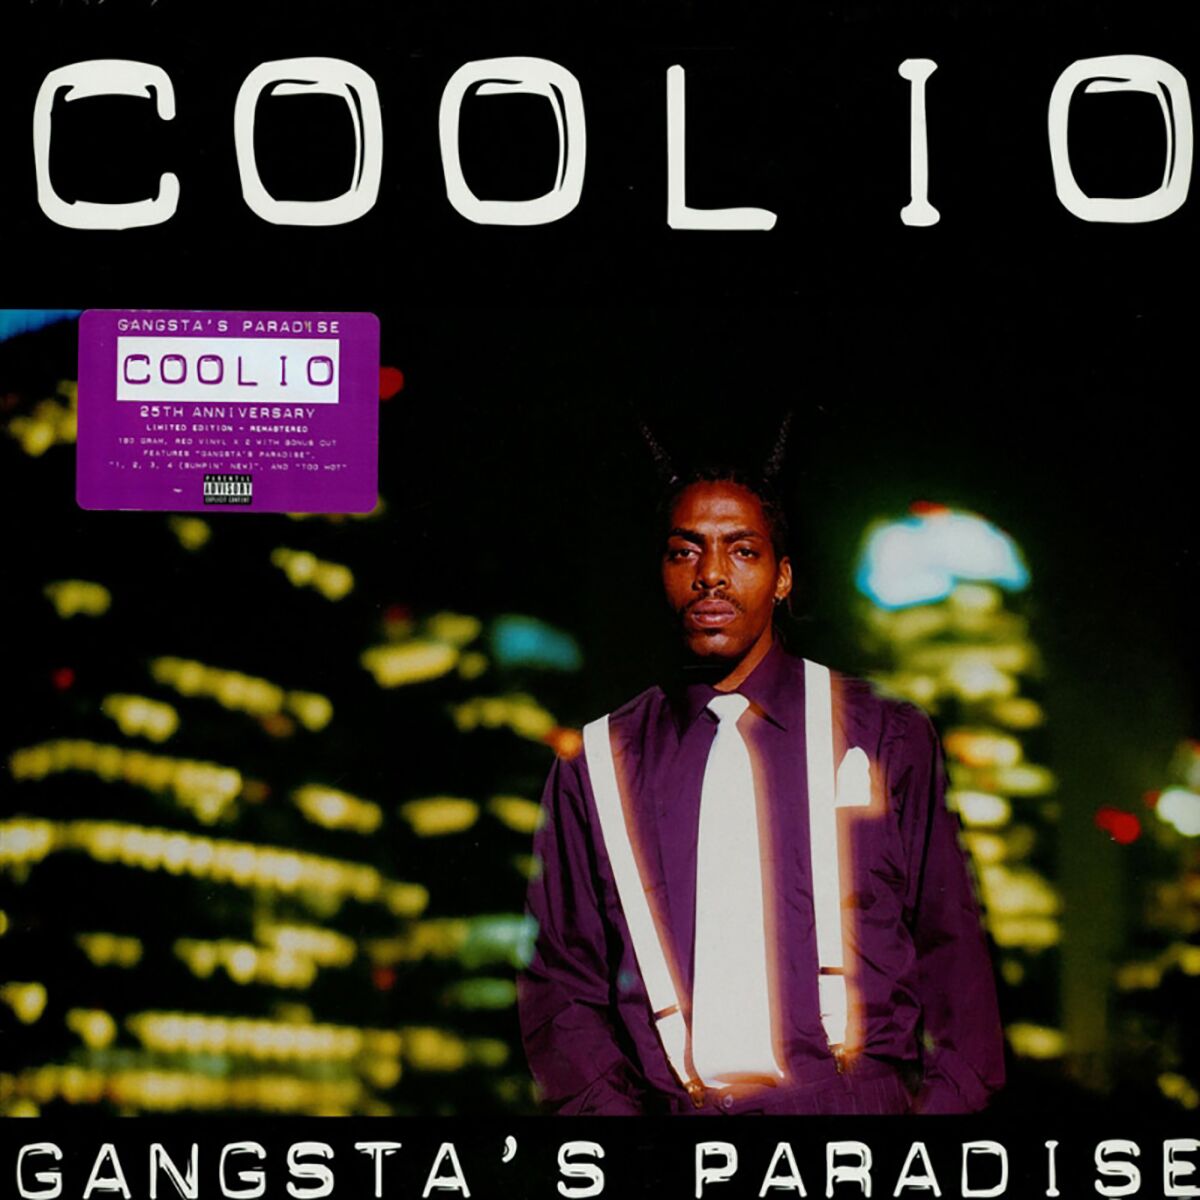 Coolio Gangsta's Paradise 25th Anniversary. Coolio Gangsta's Paradise исполнители. Coolio - Gangsta's Paradise (1995). Gangsta’s Paradise Кулио. Gangsta s mp3